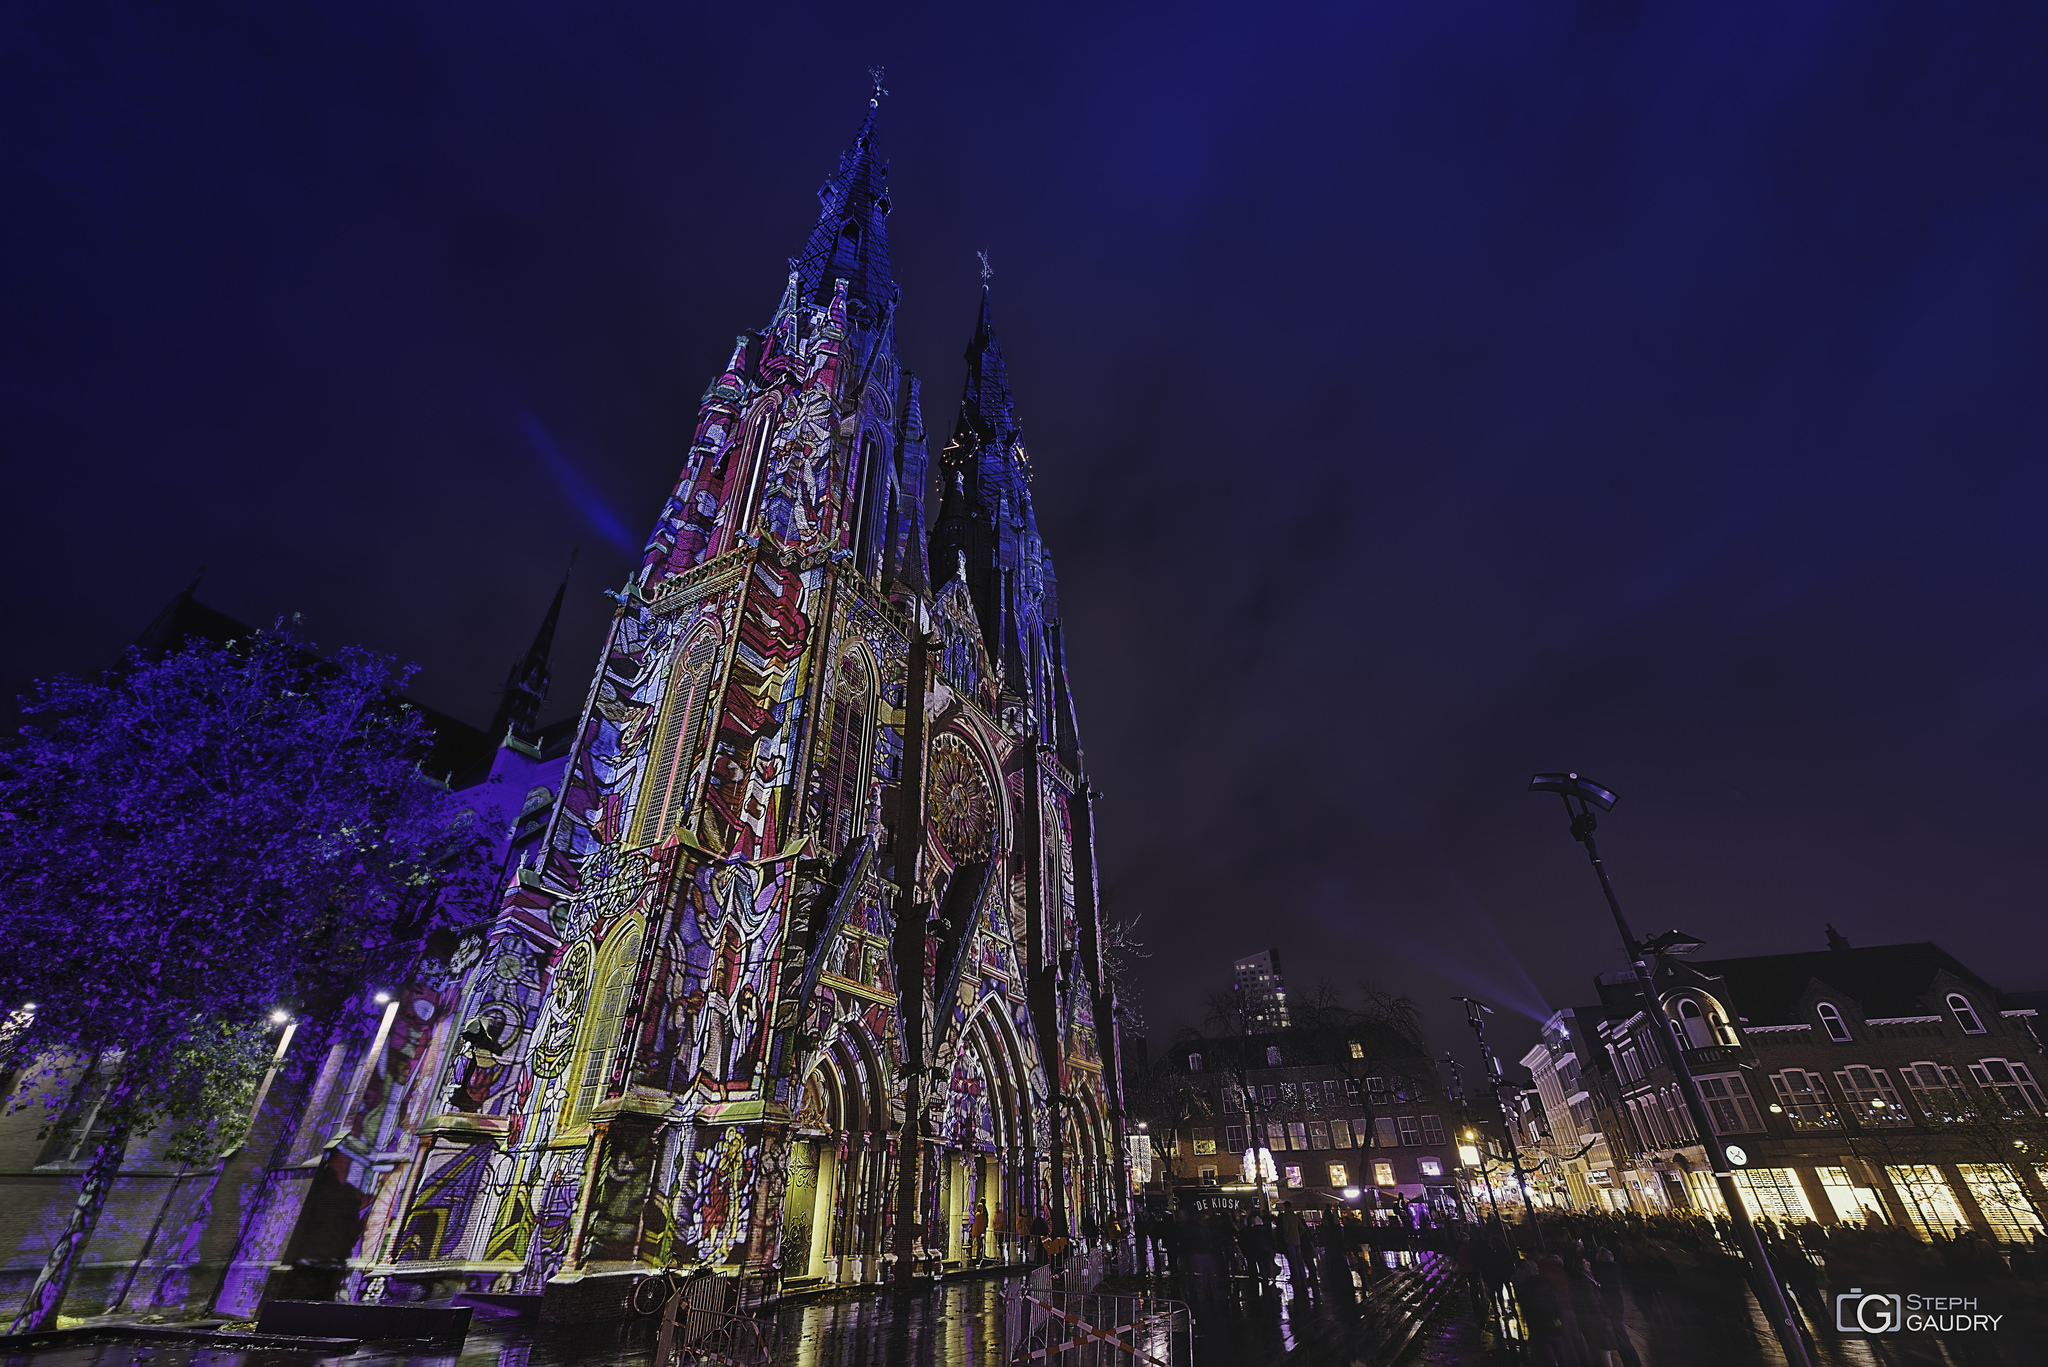 Sint Catharinakerk Eindhoven glow 2017 [Cliquez pour lancer le diaporama]